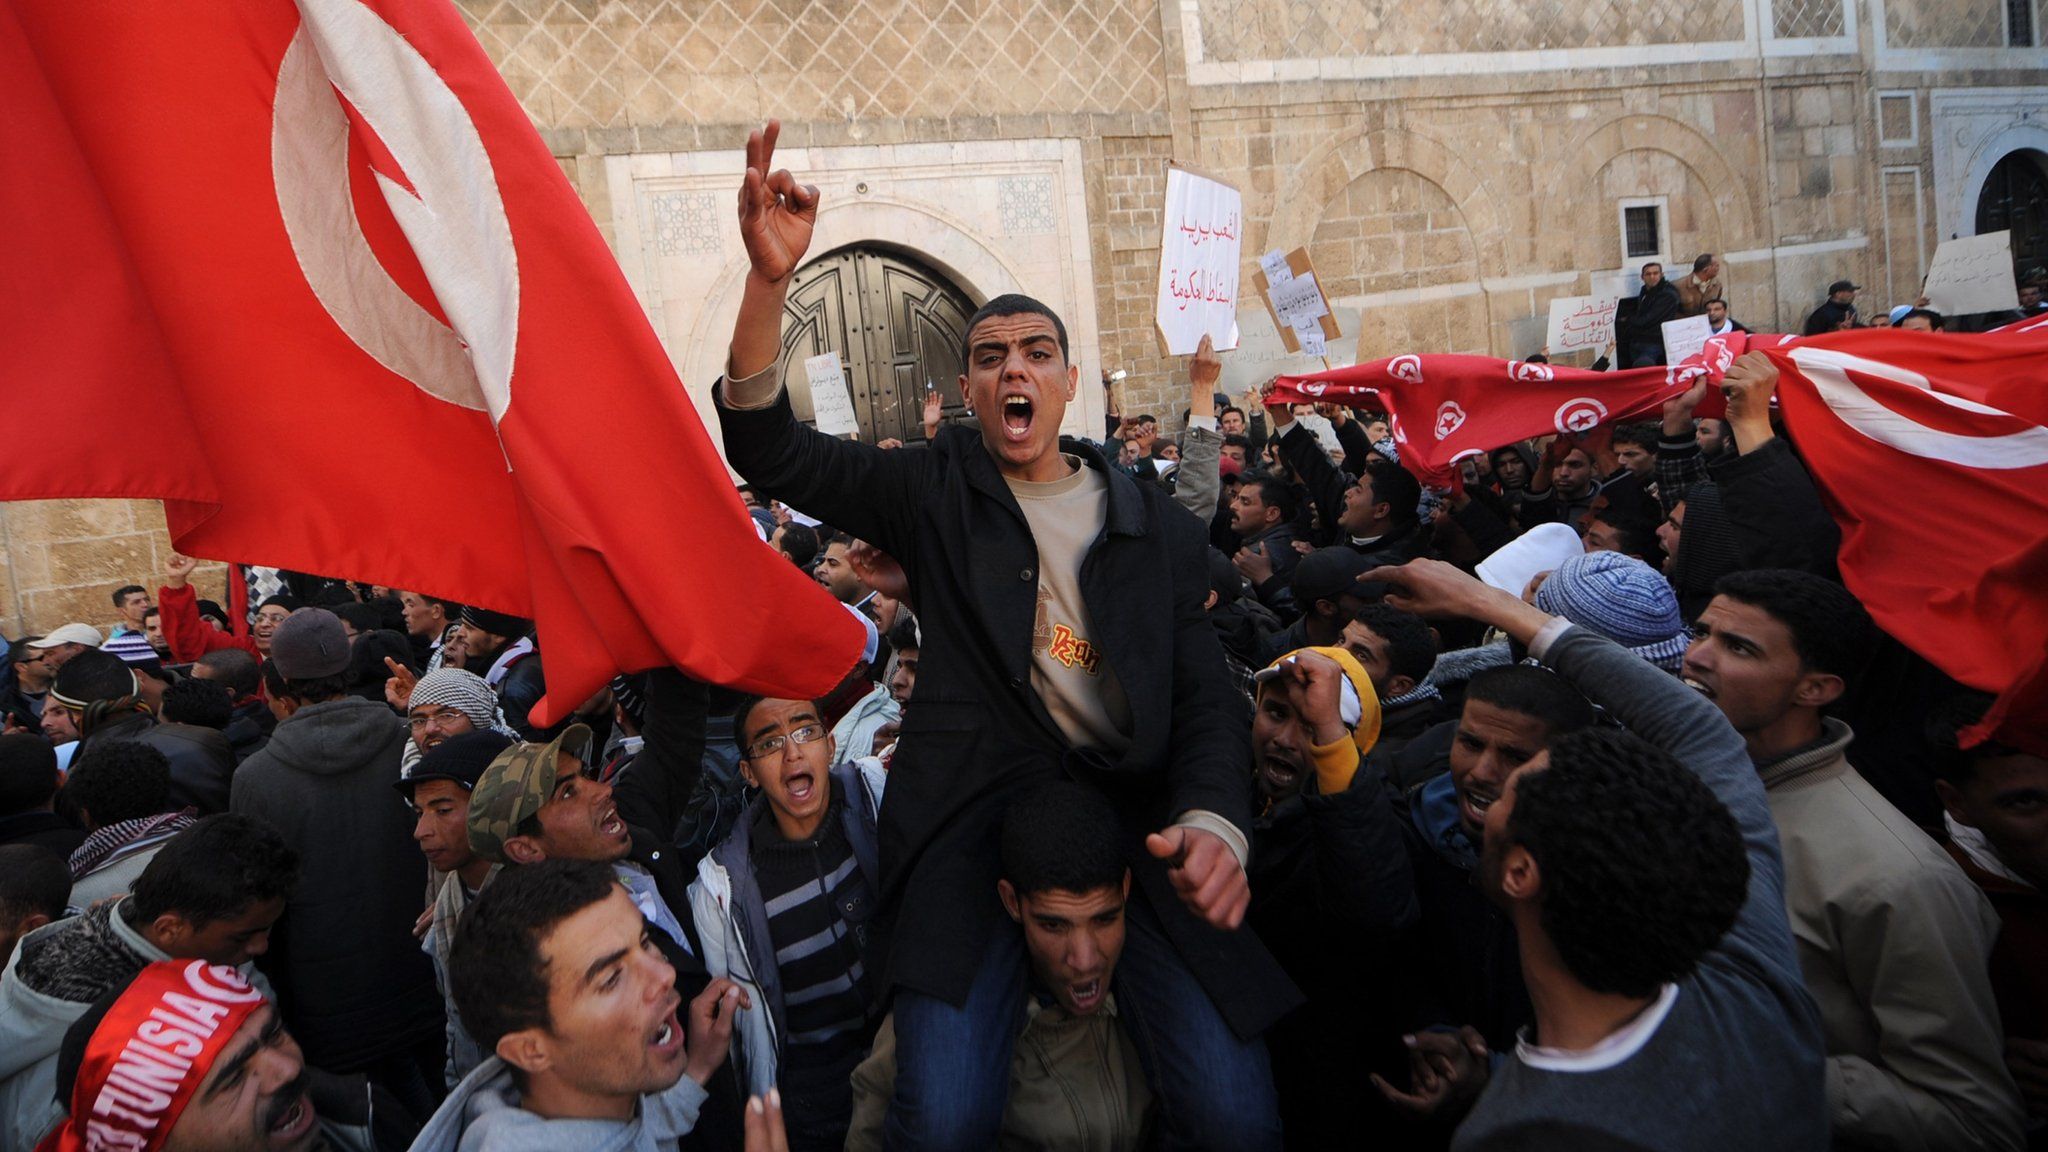 Protests in Tunisia in 2011